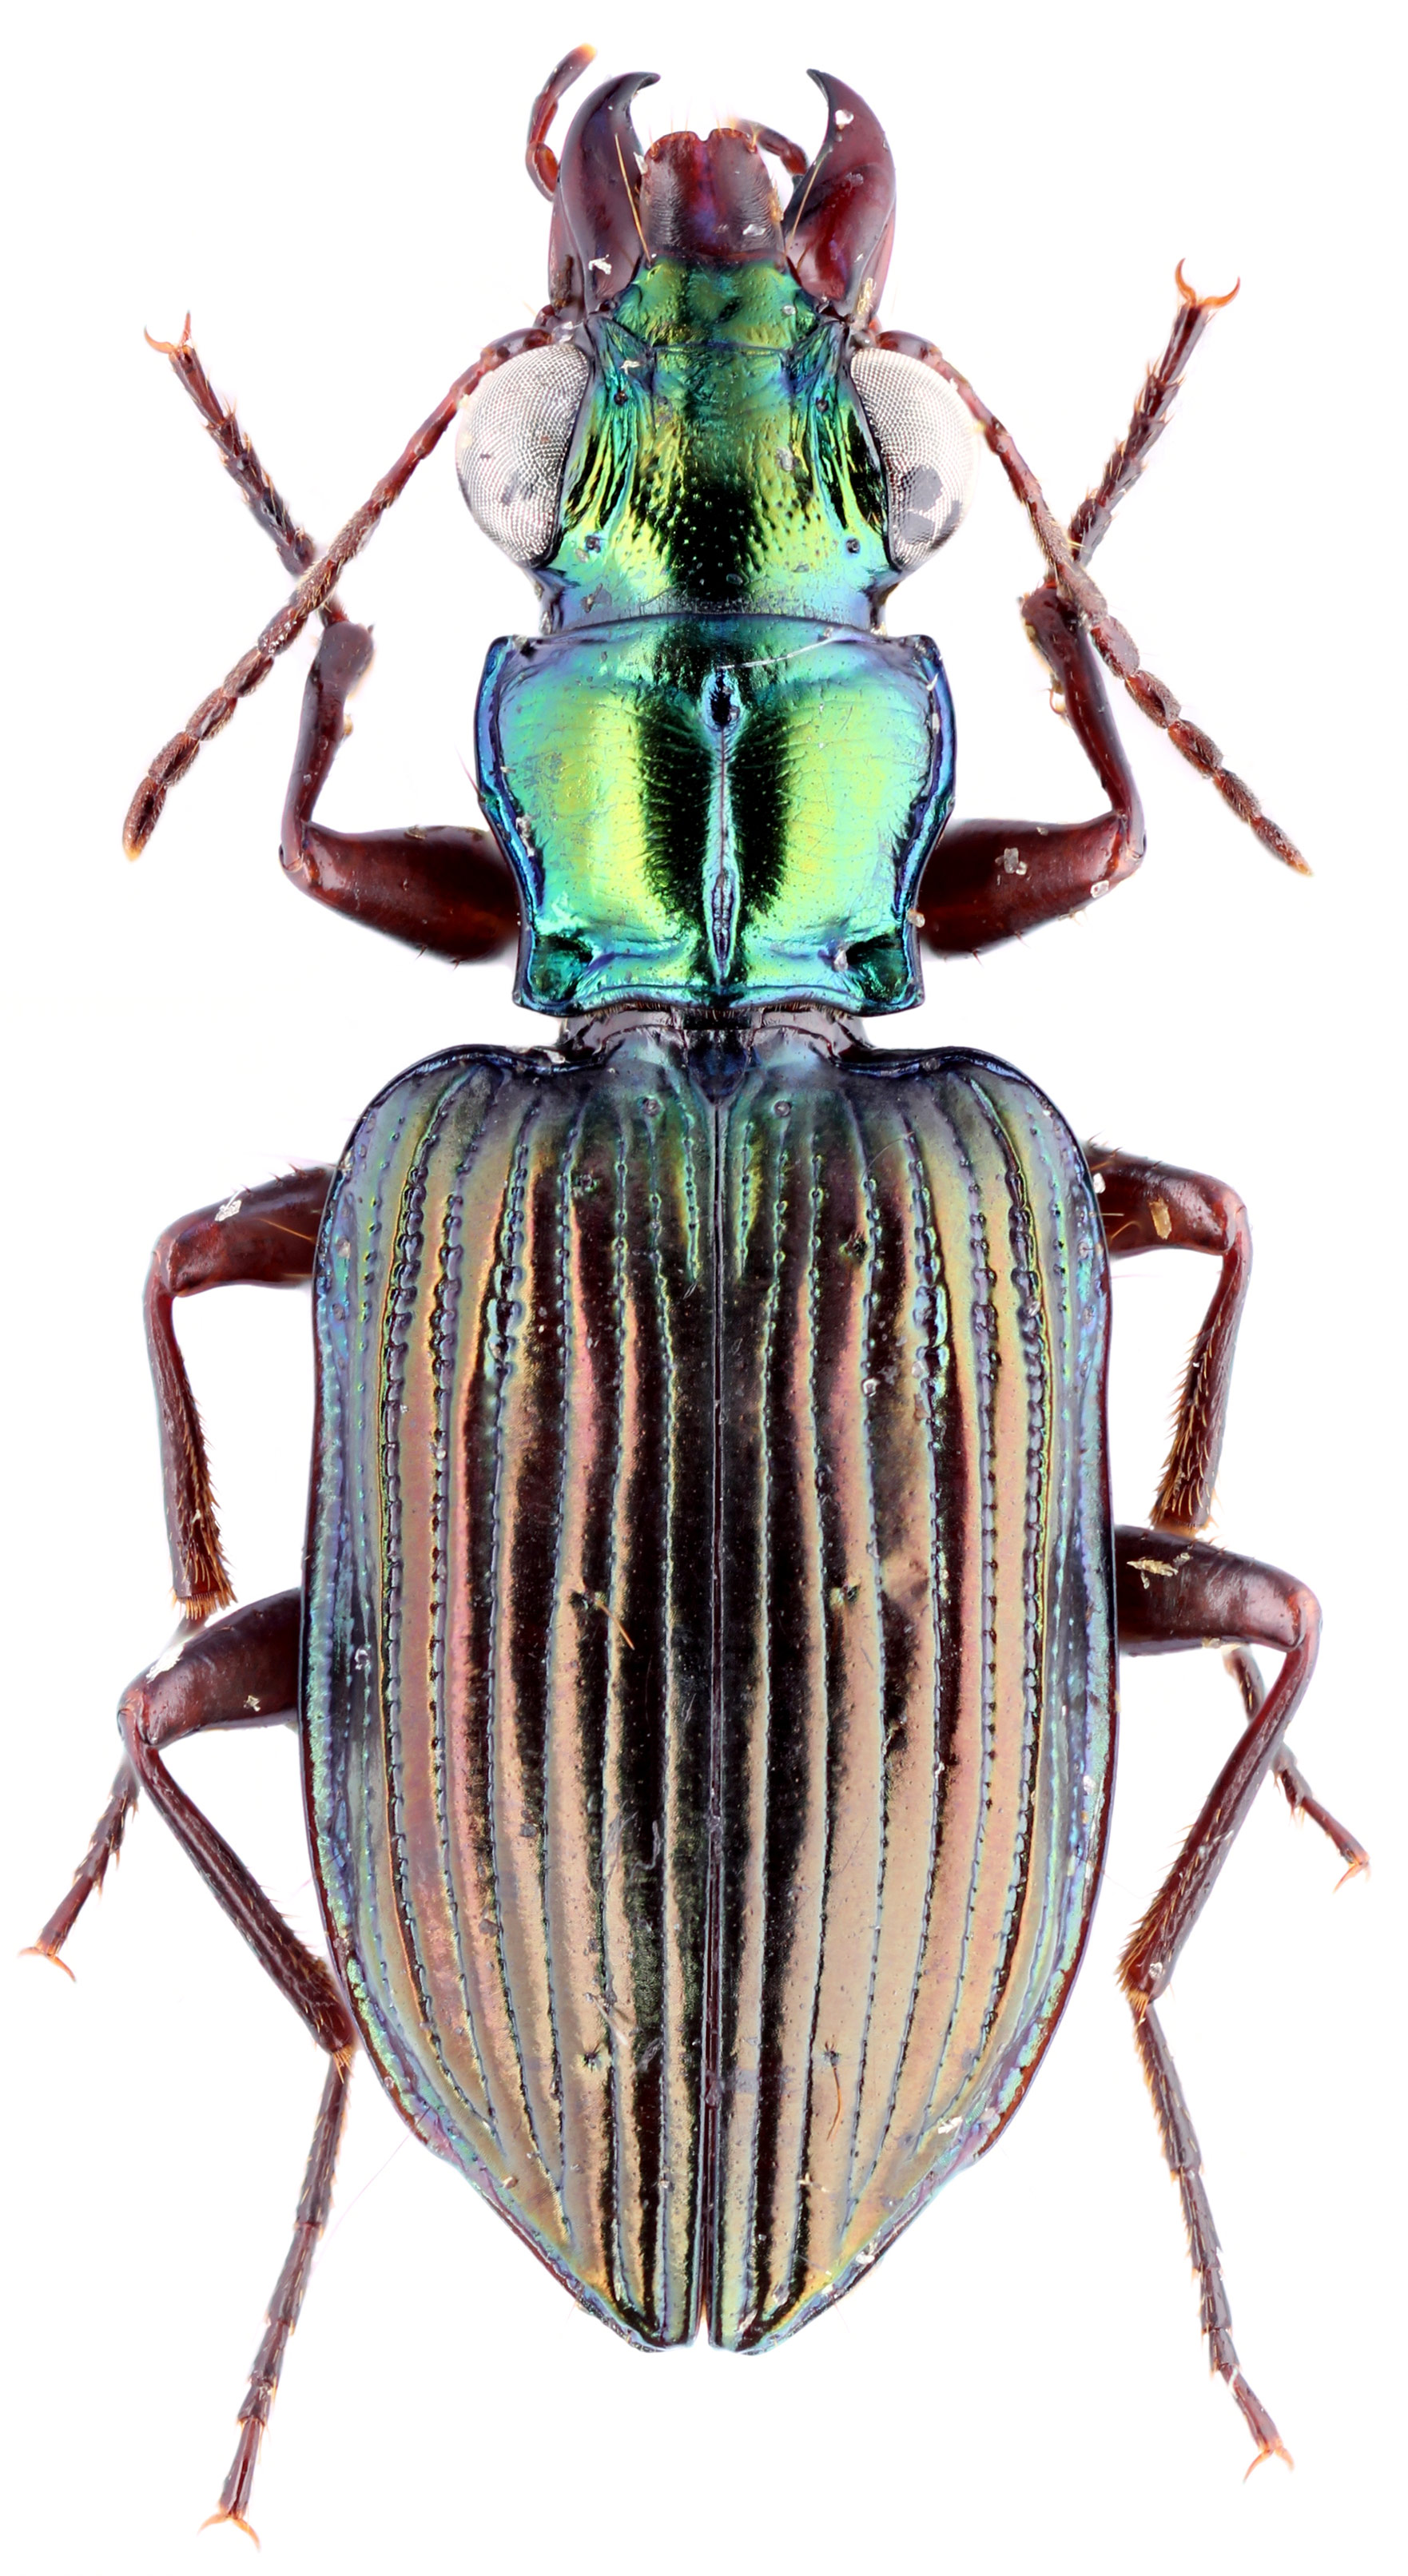 Subfamily Lebiinae Bonelli, 1810 - Carabidae